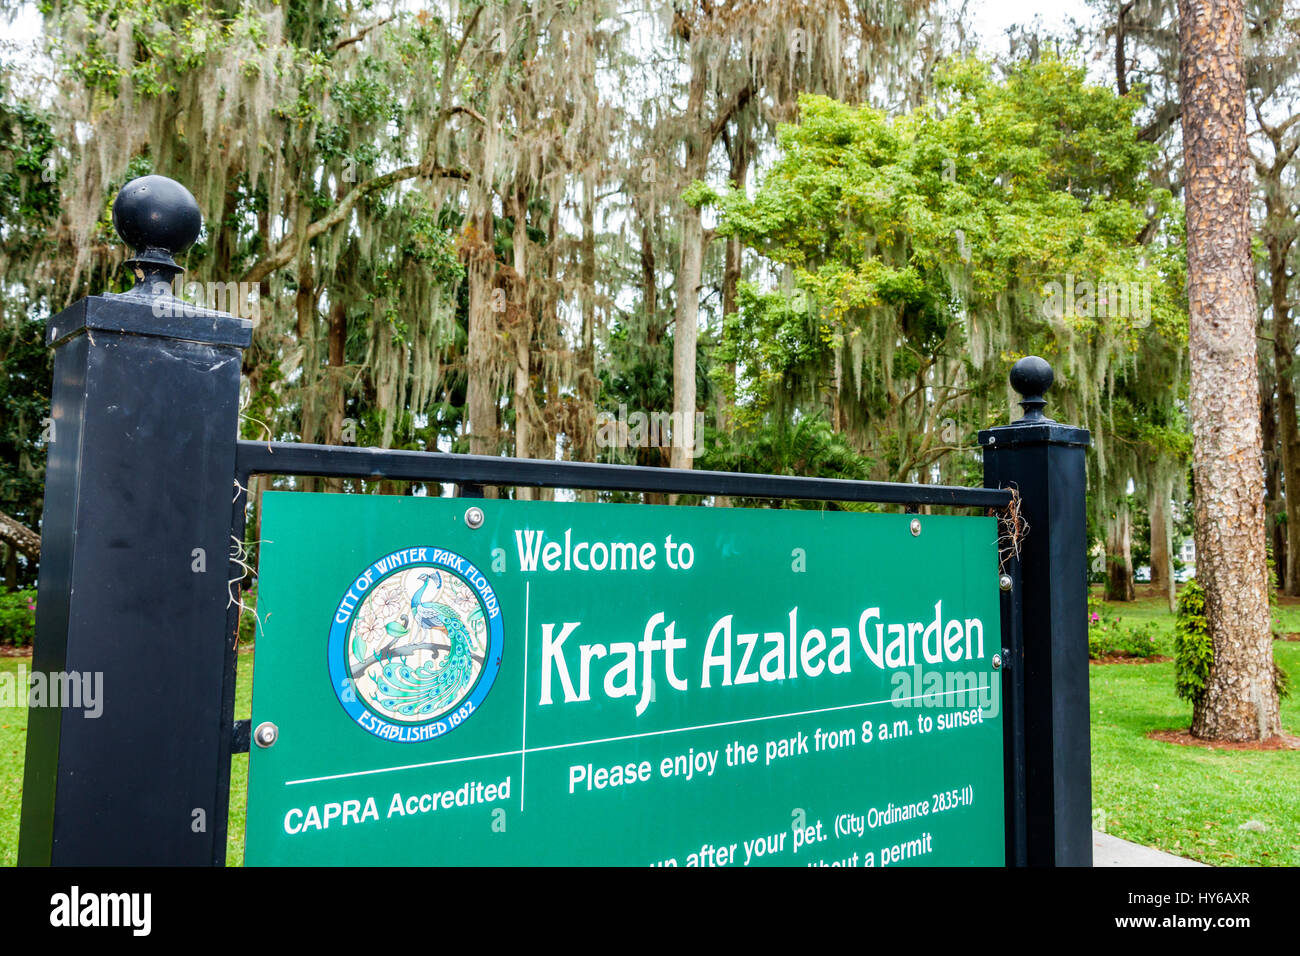 Winter Park Florida,Orlando,Kraft Azalea Garden,public park,cypress trees,moss,sign,CAPRA Accredited,FL170222090 Stock Photo